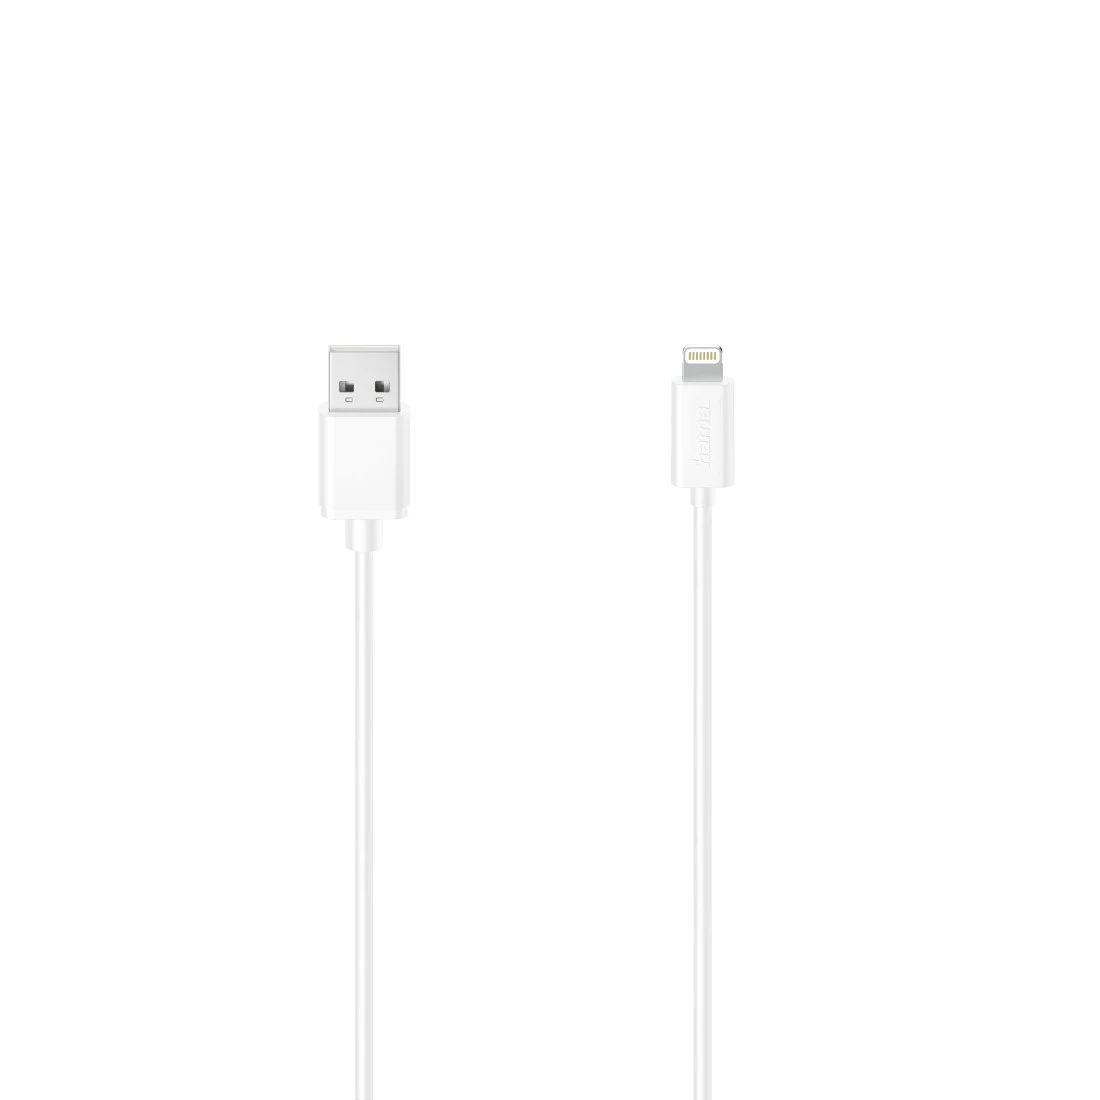 USB-Kabel für iPhone/iPad mit Lightning Connector, USB 2.0, 1,50 m | Hama